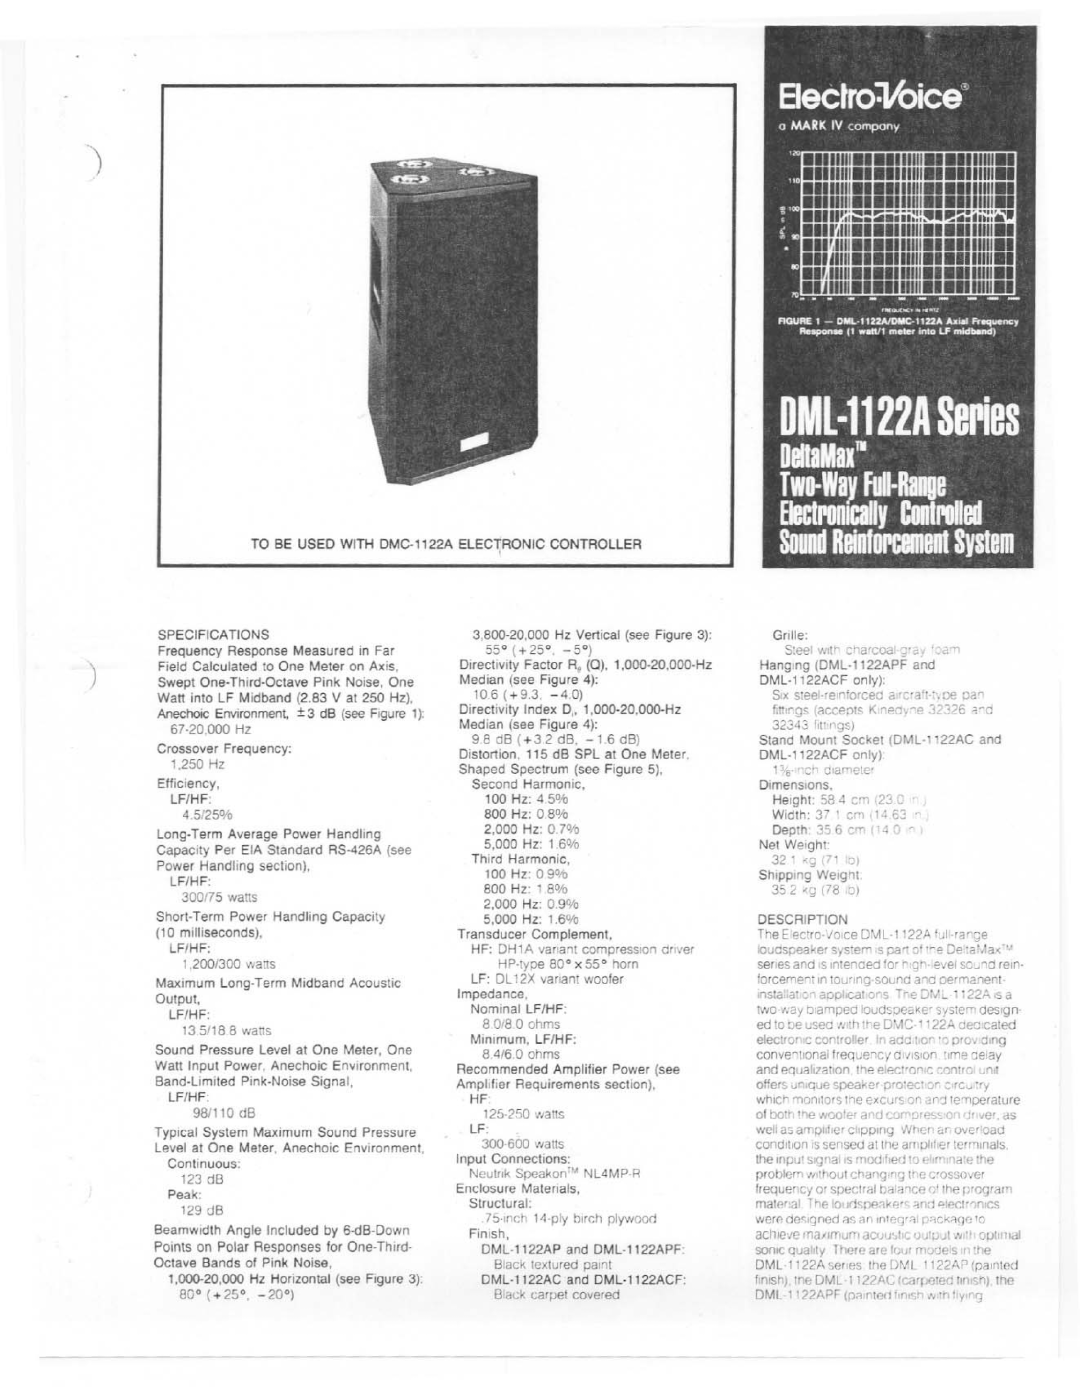 Electro-Voice DML-1122A Series manual 